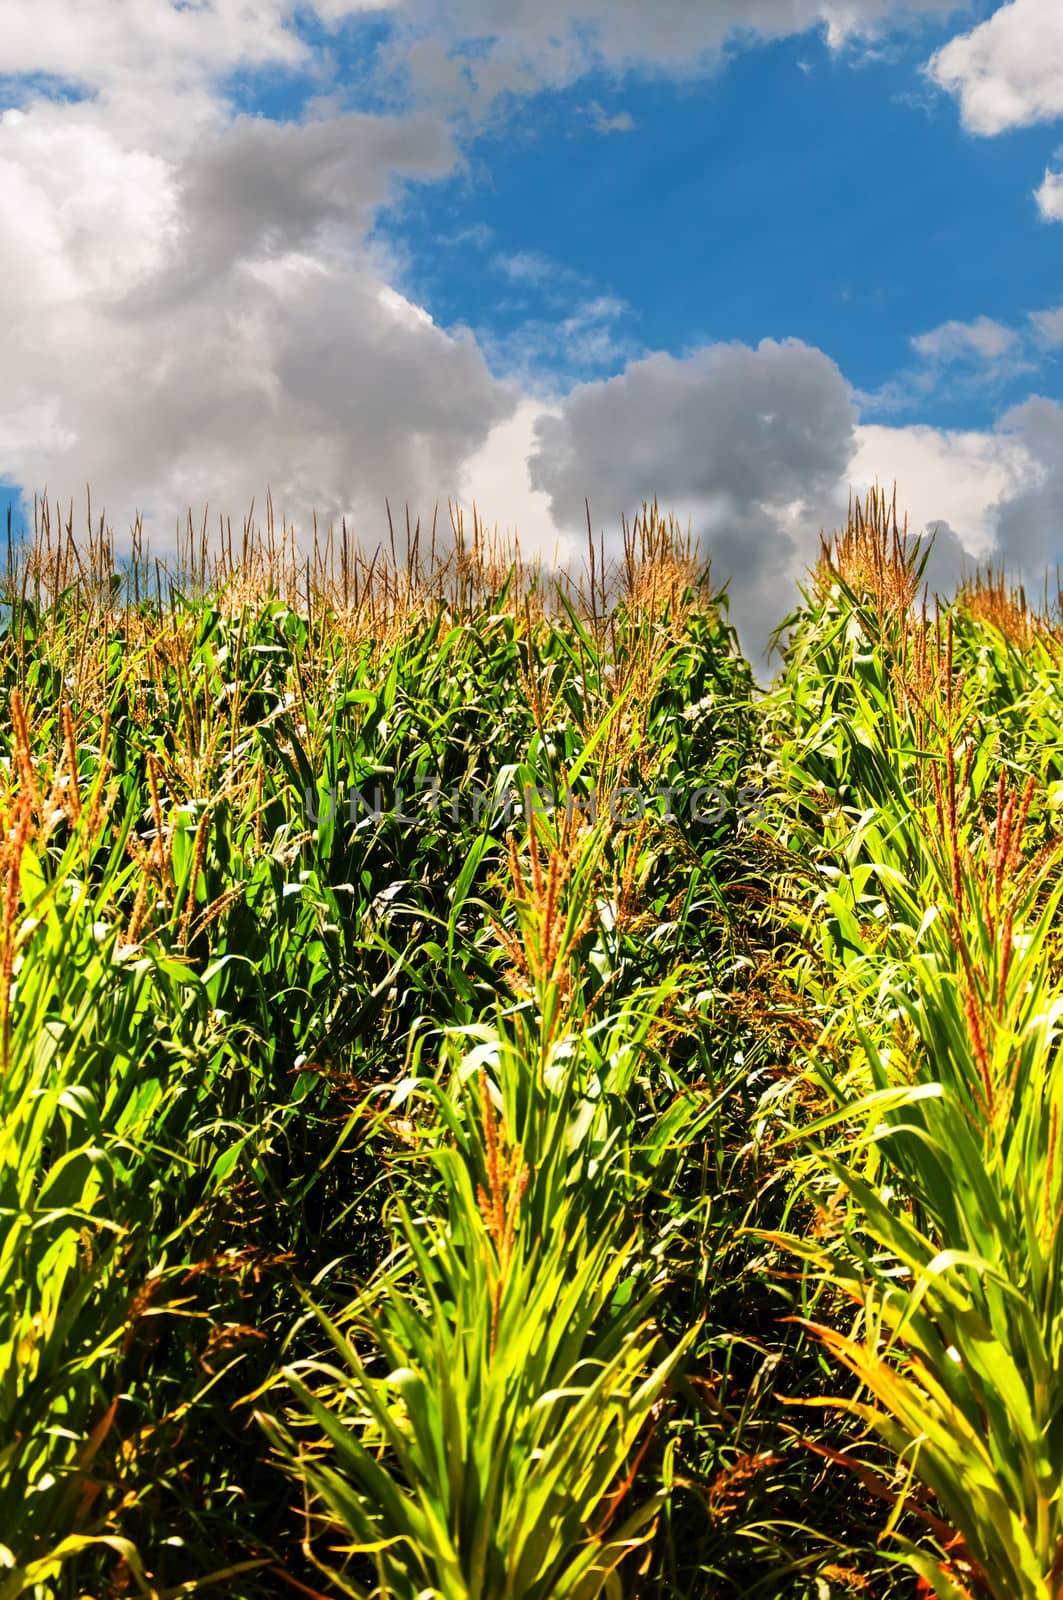 Sun shining upon rows of corn in a field